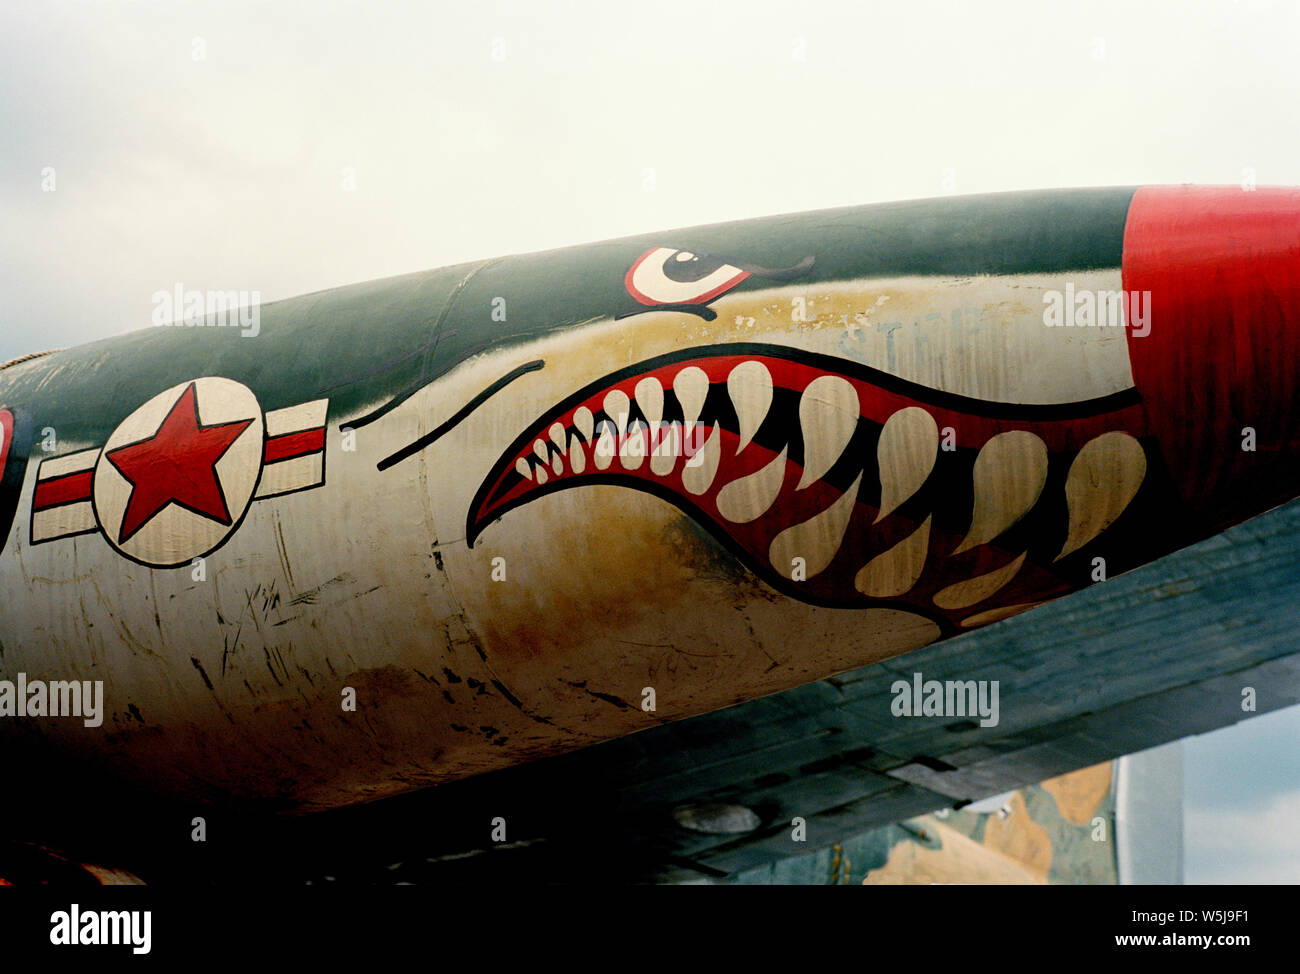 Haie Mund American WW2-Ära bomber Rakete. Waffe Waffen Waffen Militär Bombe Humor Humor humorvoll Stockfoto